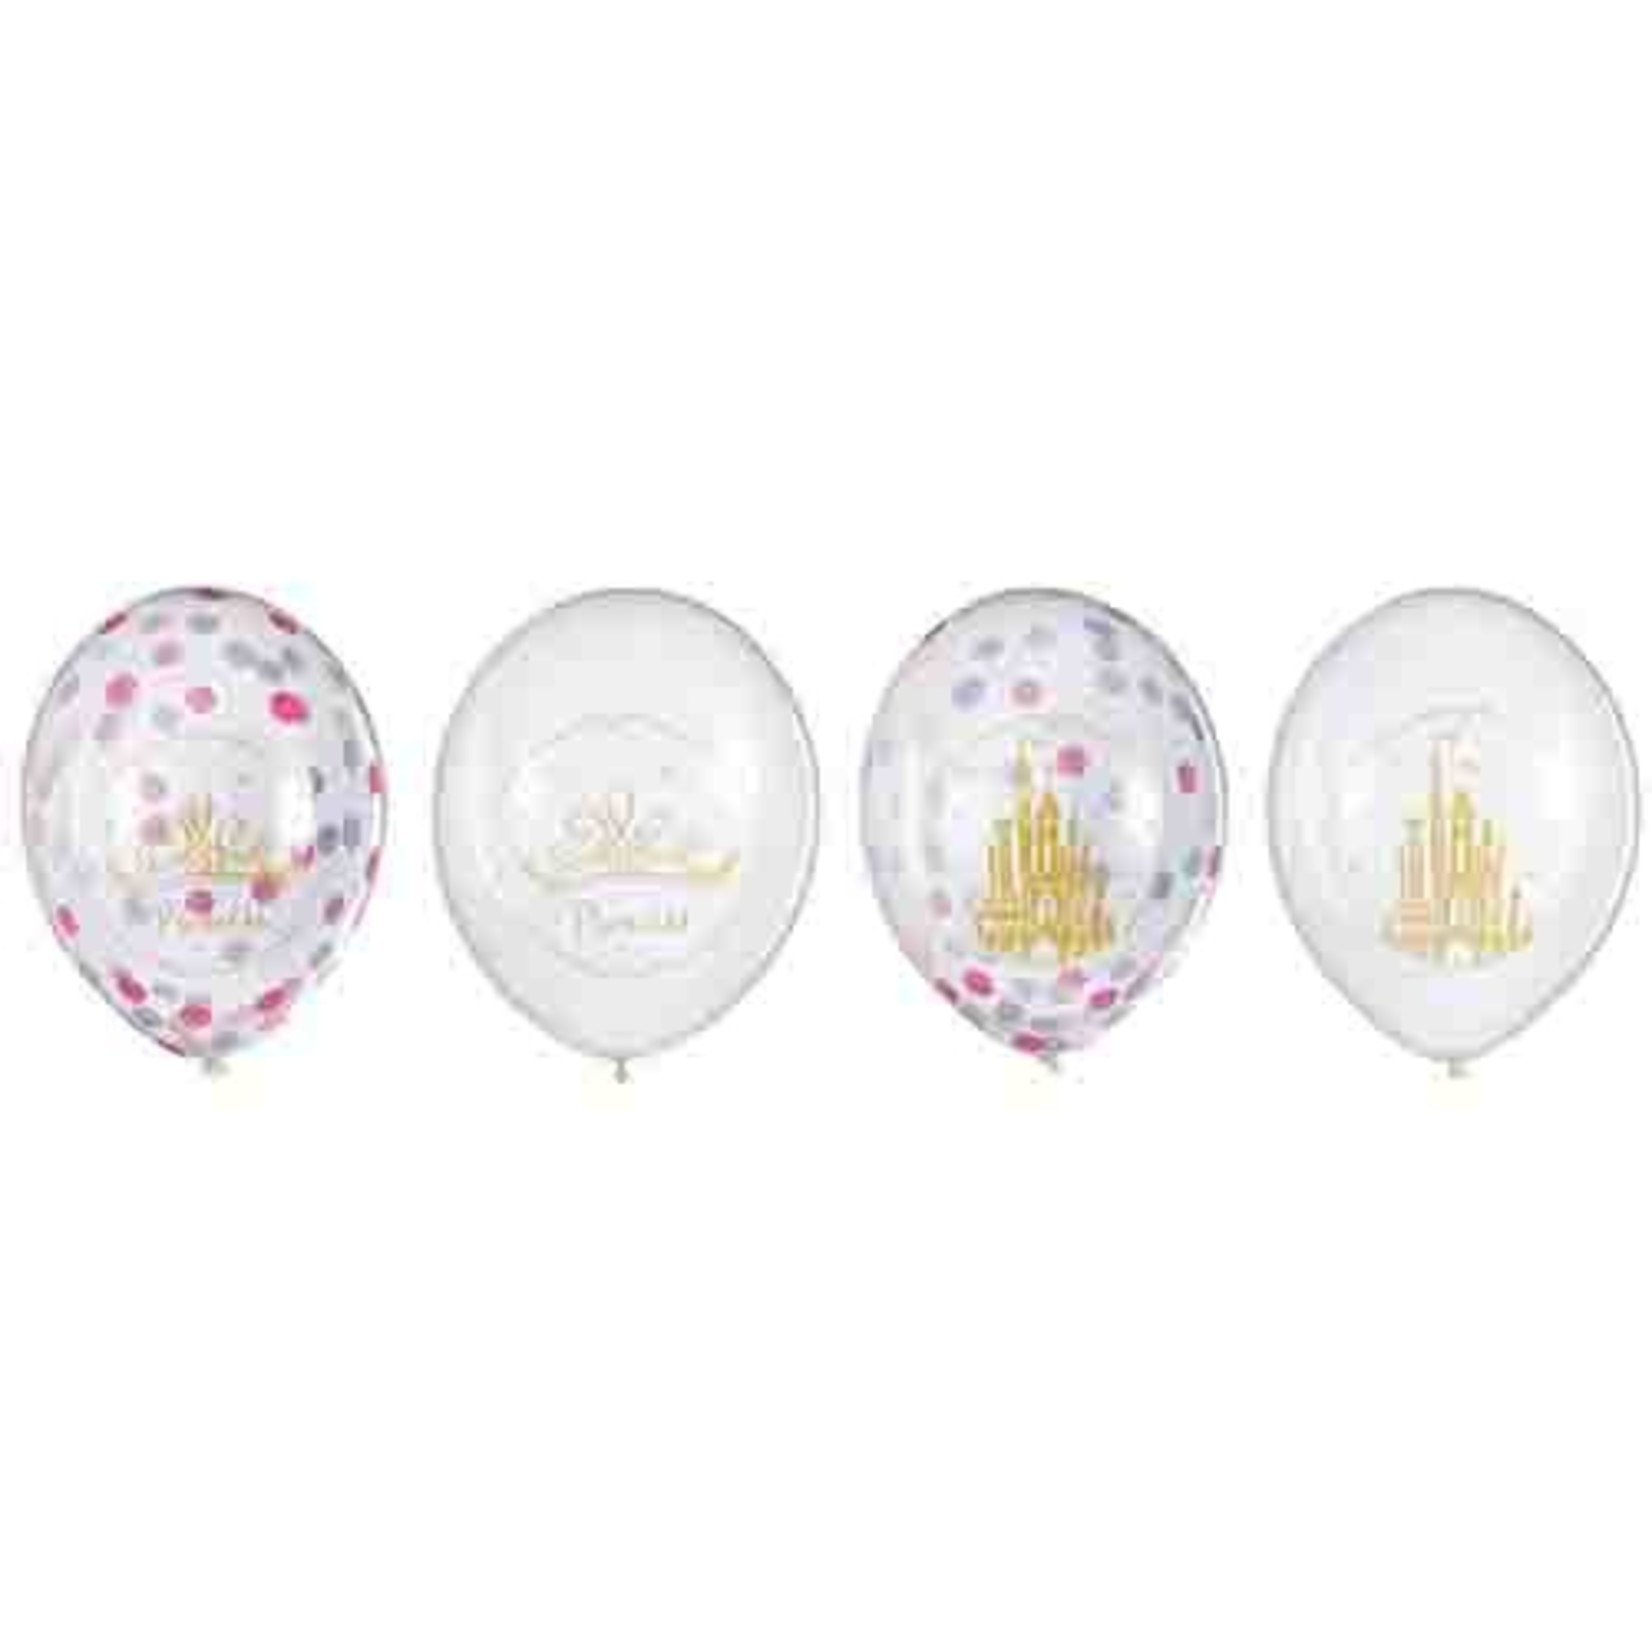 Amscan 12" Disney Princess Confetti-Filled Latex Balloons  - 6ct.